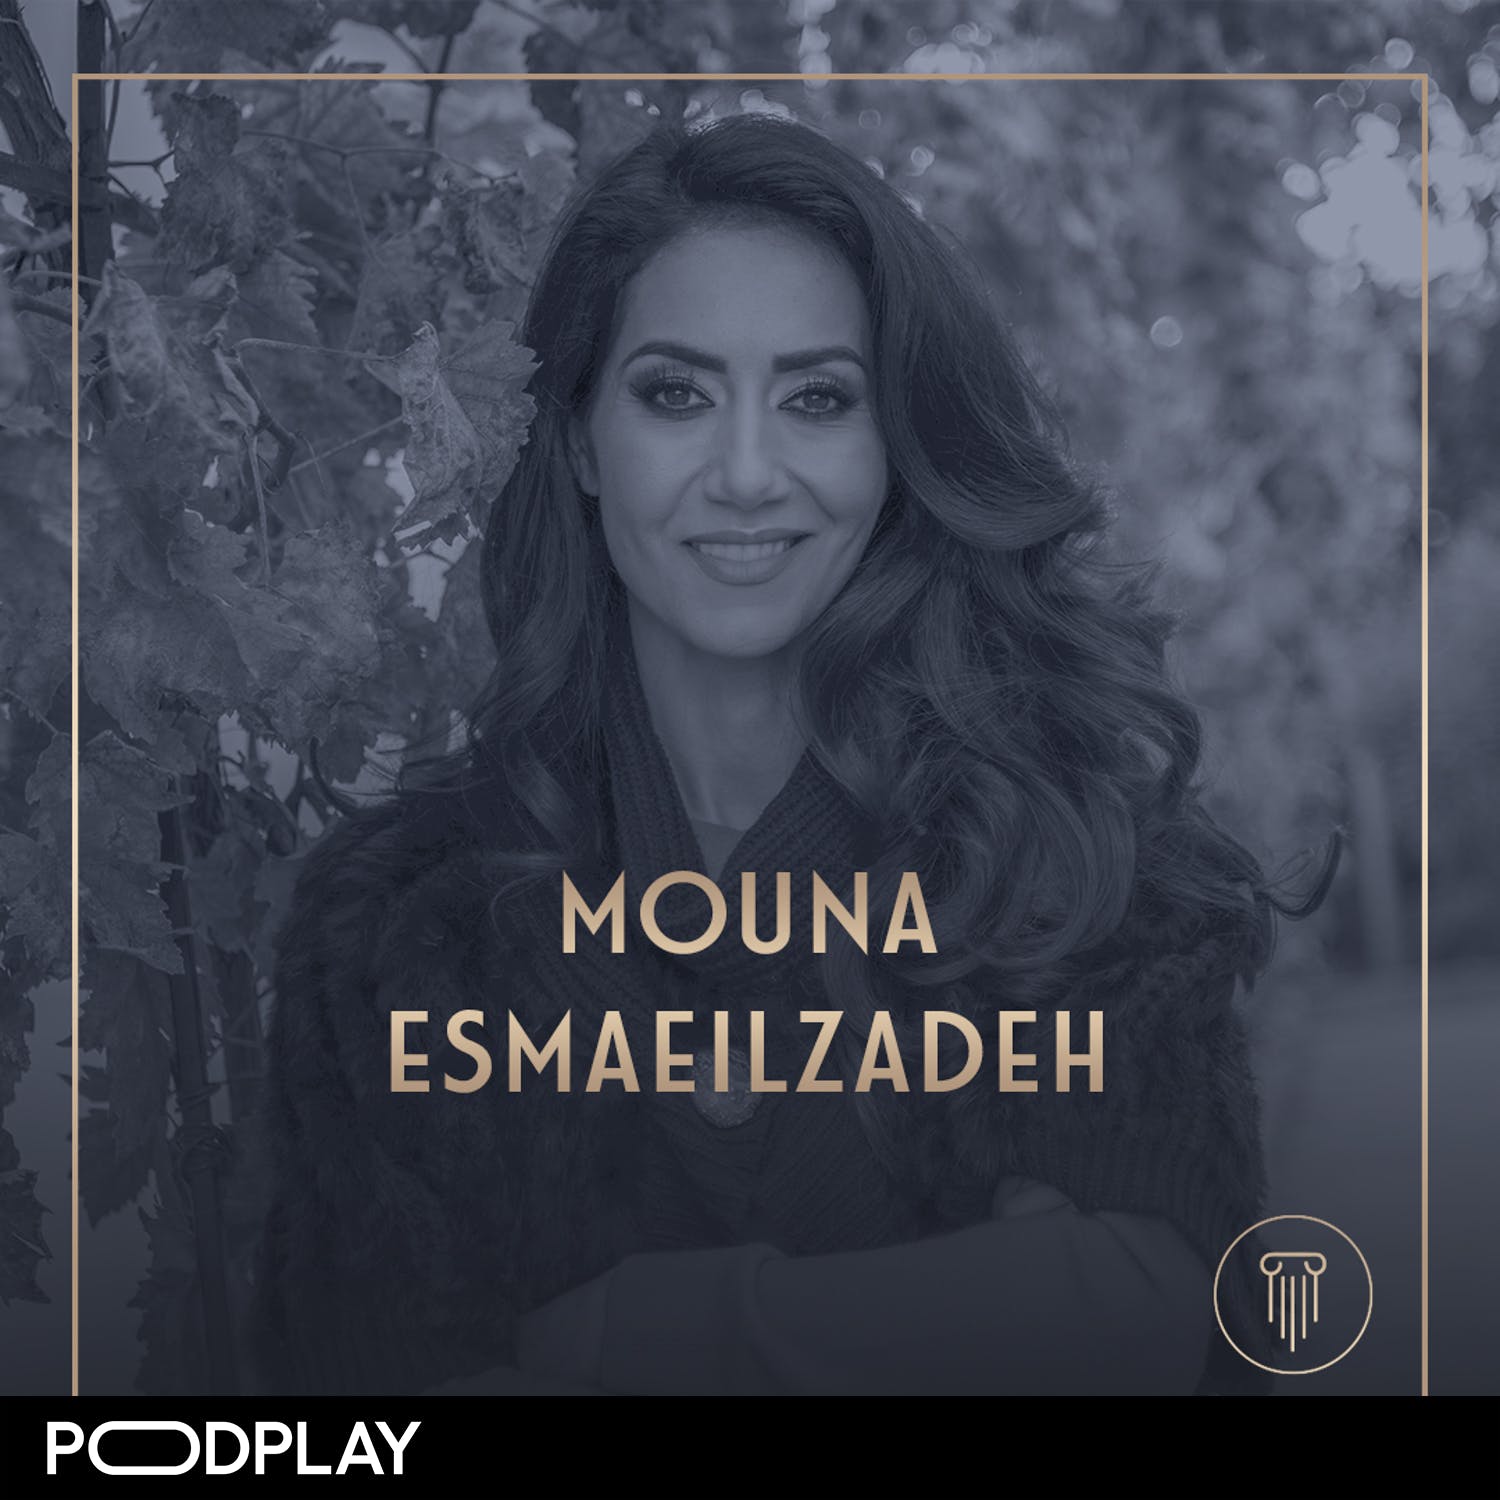 308. Dr. Mouna Esmaeilzadeh - Snart kan vi lura döden, Original